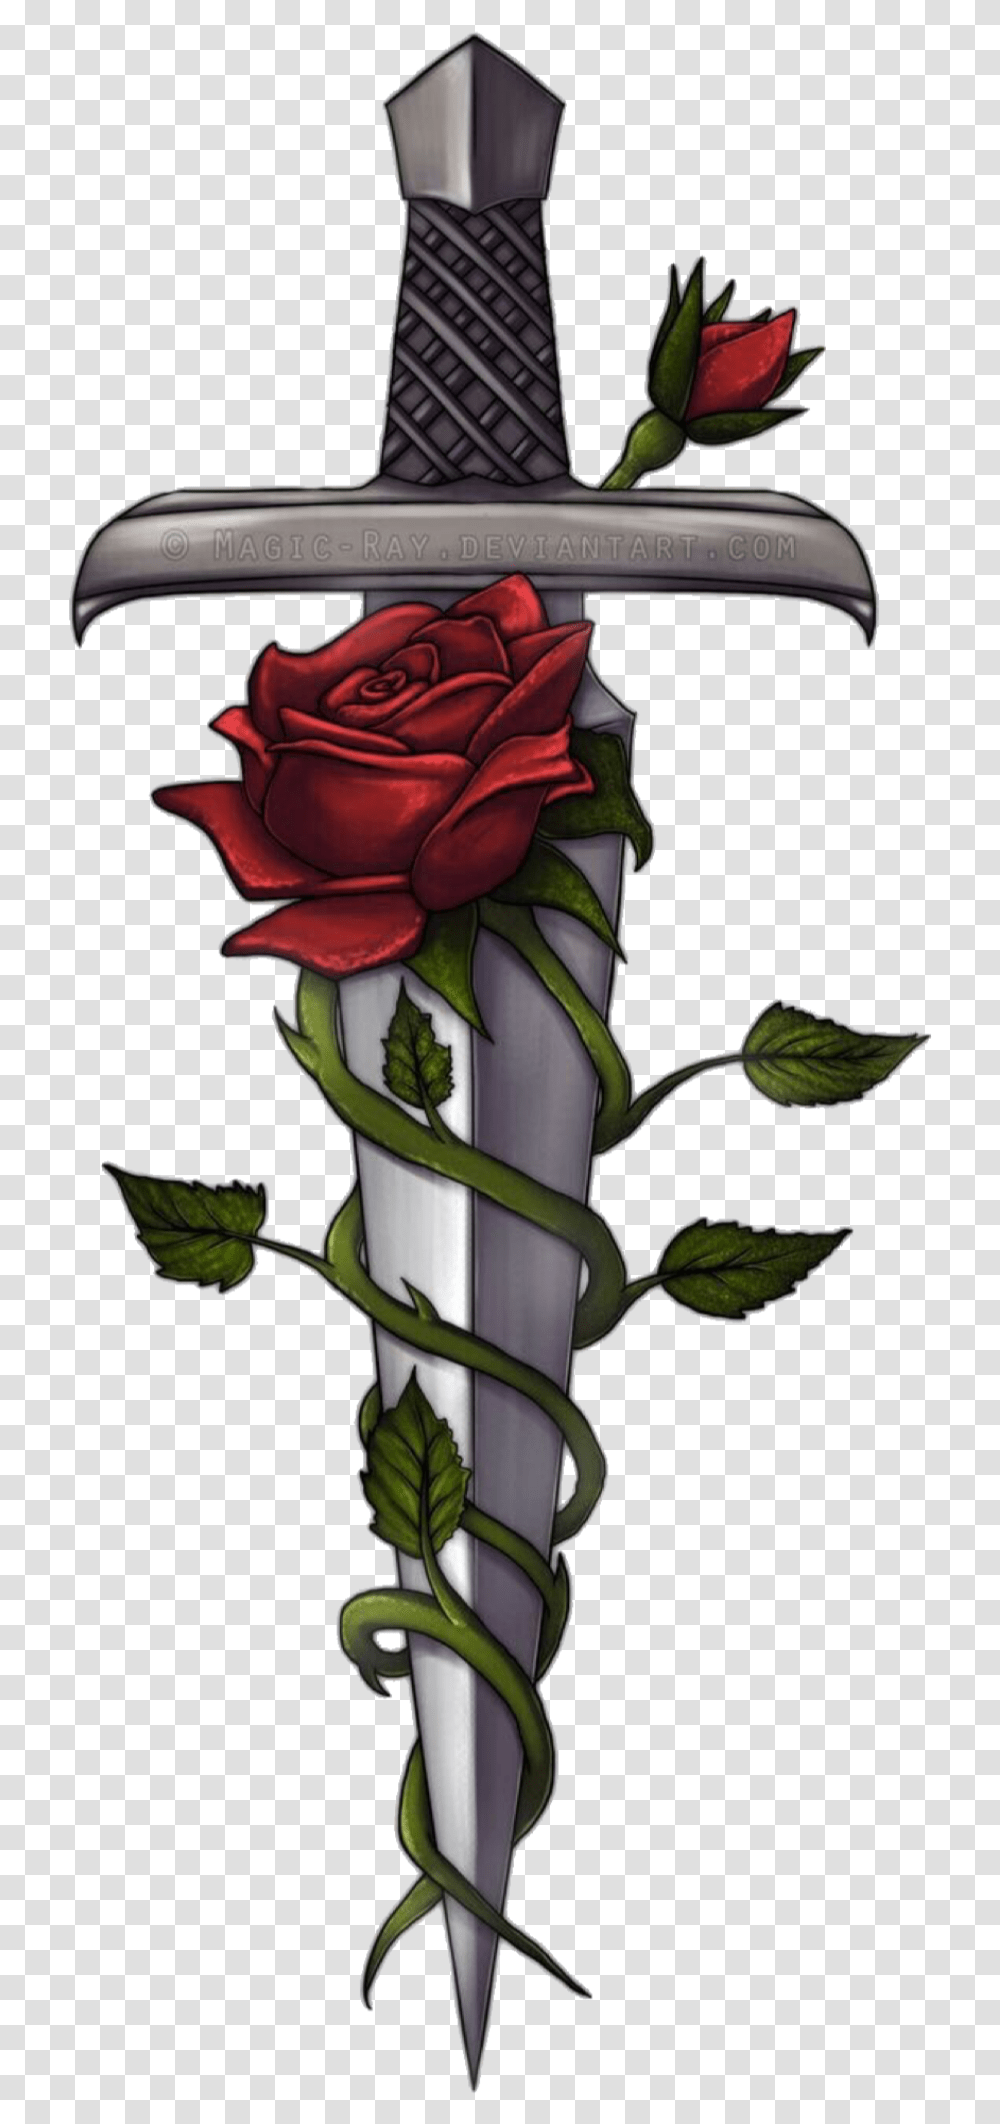 Dagger Knife Rose Vine Thorns Stab Cut Poke Rose And Sword Tattoo, Plant, Flower, Flower Arrangement, Flower Bouquet Transparent Png